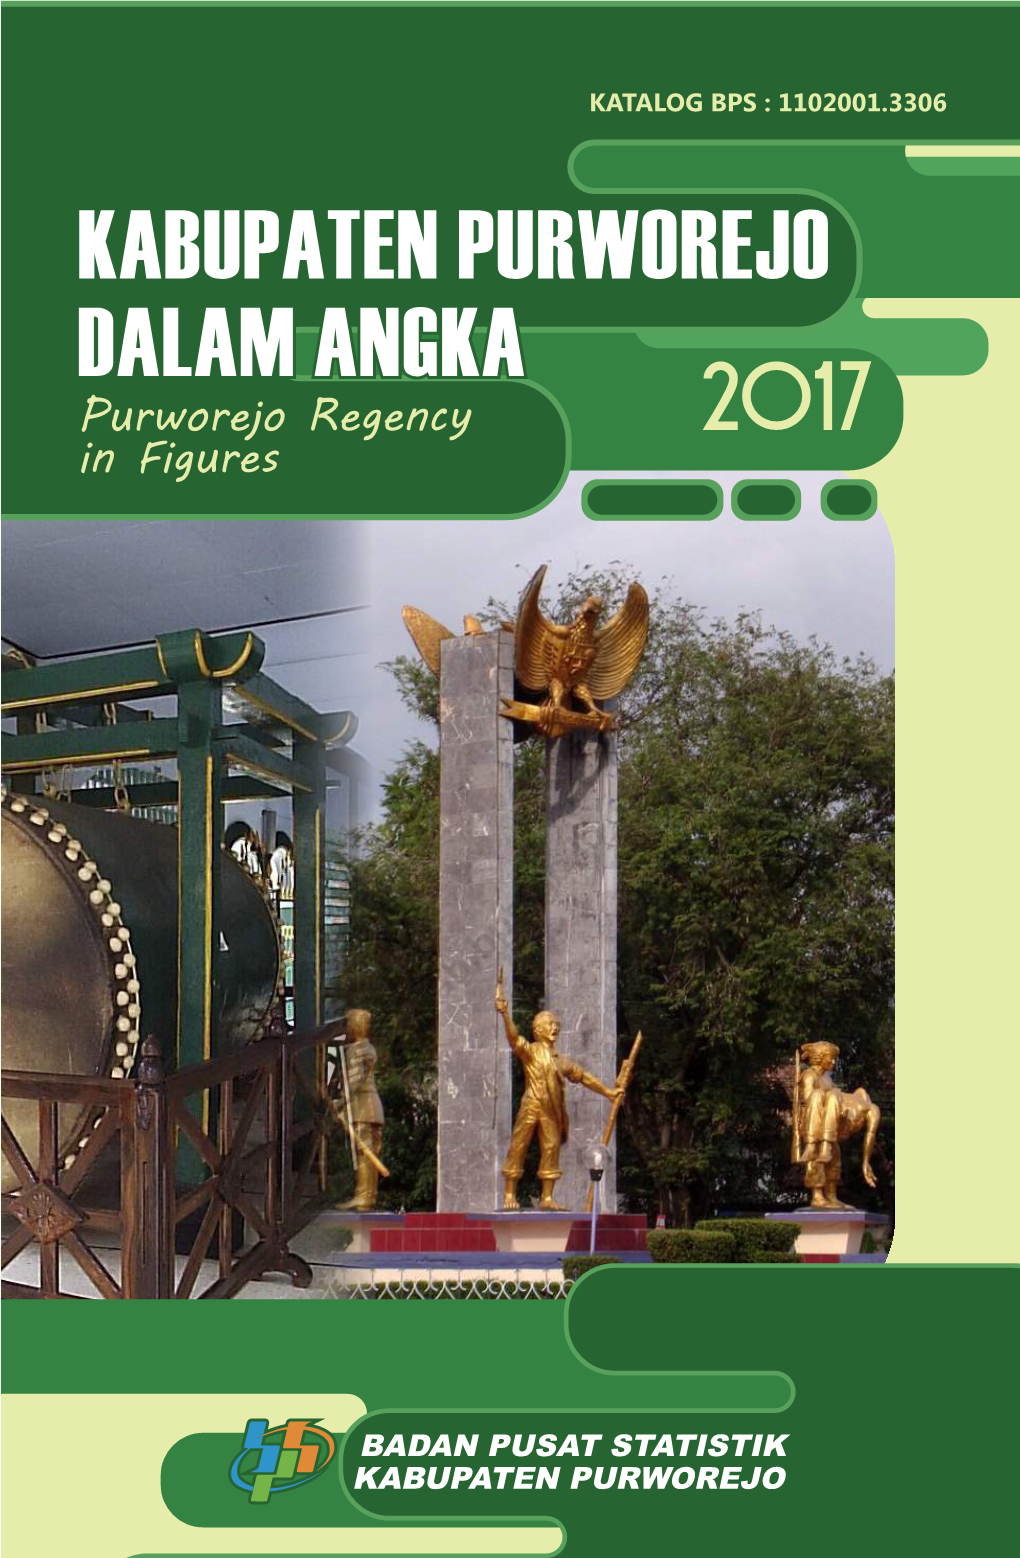 KABUPATEN PURWOREJO DALAM ANGKA Purworejo Regency 2017 in Figures